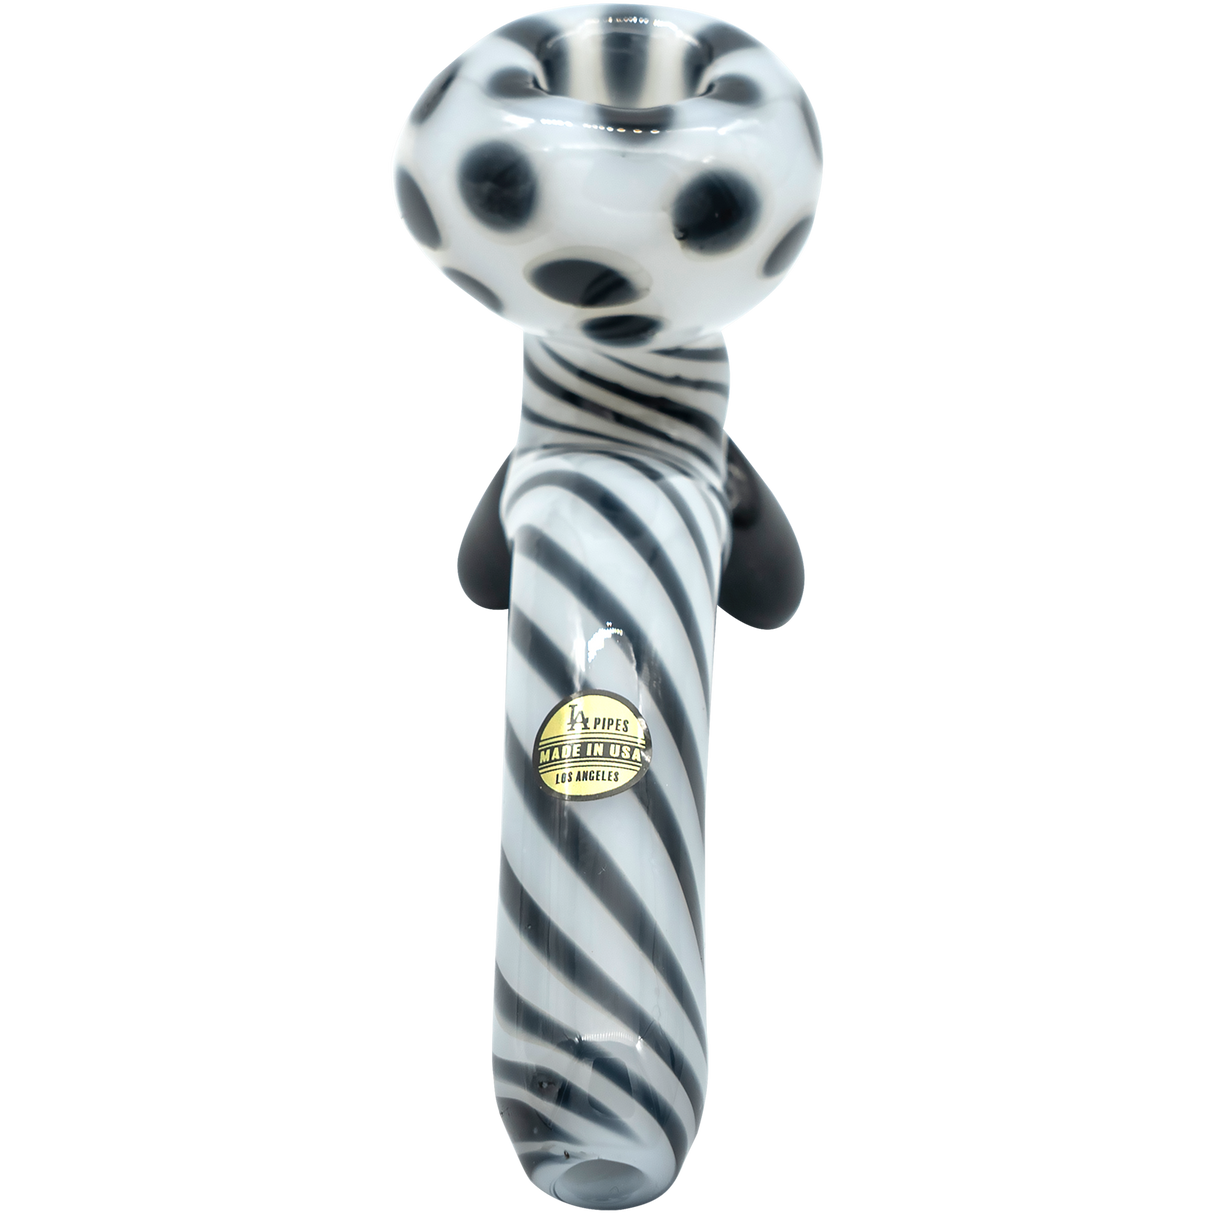 LA Pipes Bone White Sherlock Glass Pipe with Black Stripes, Front View, 4.35" Length